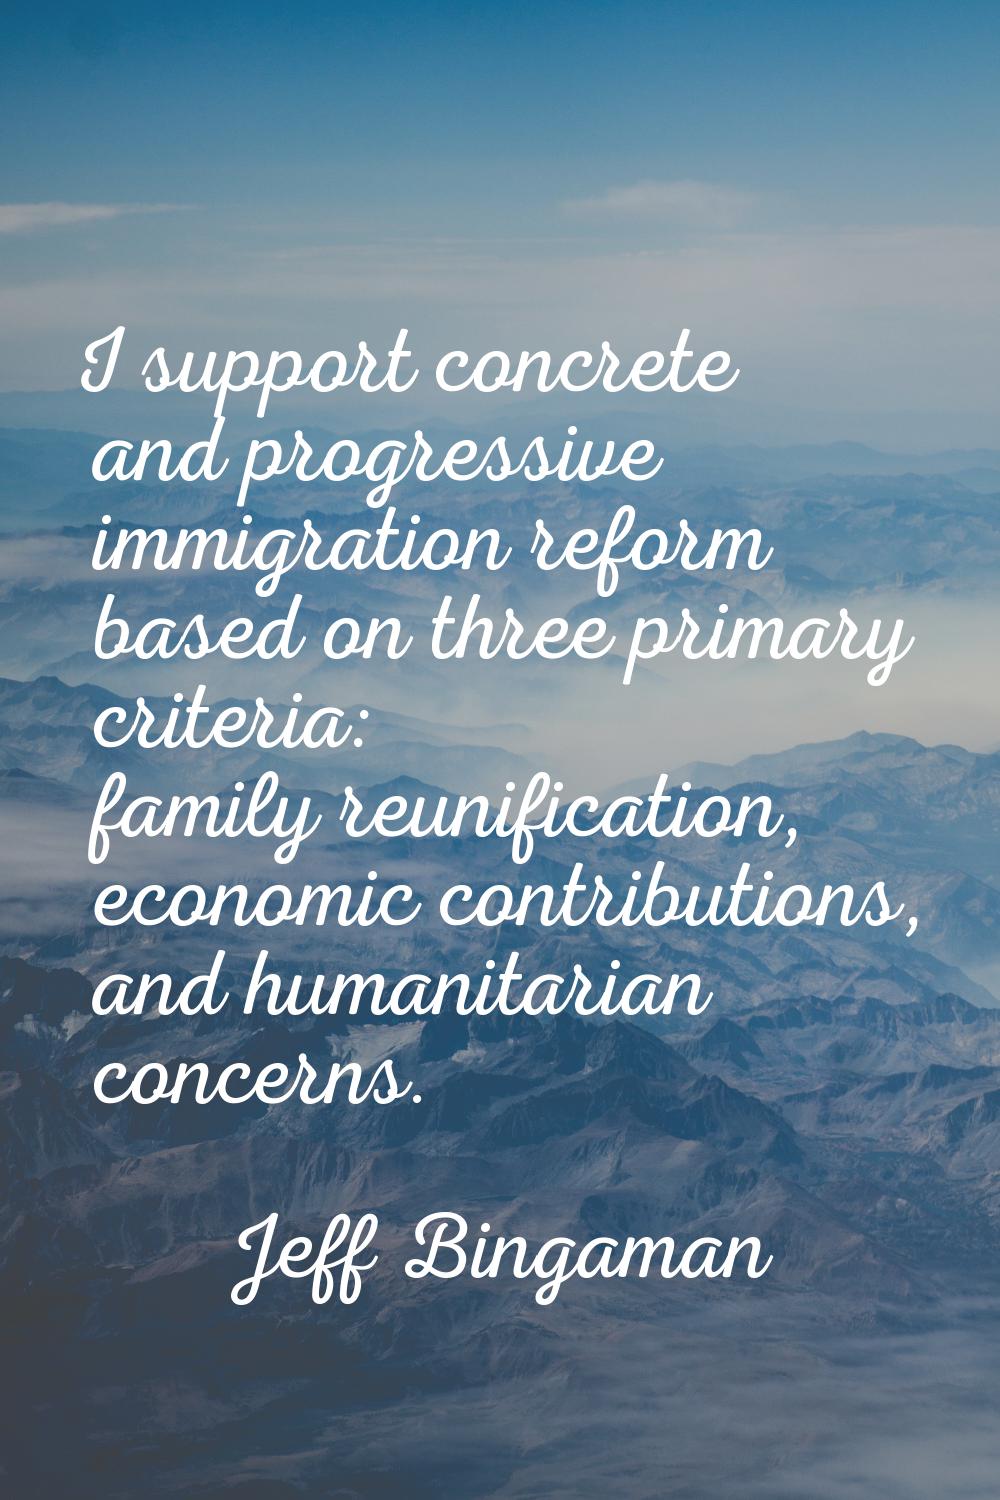 I support concrete and progressive immigration reform based on three primary criteria: family reuni